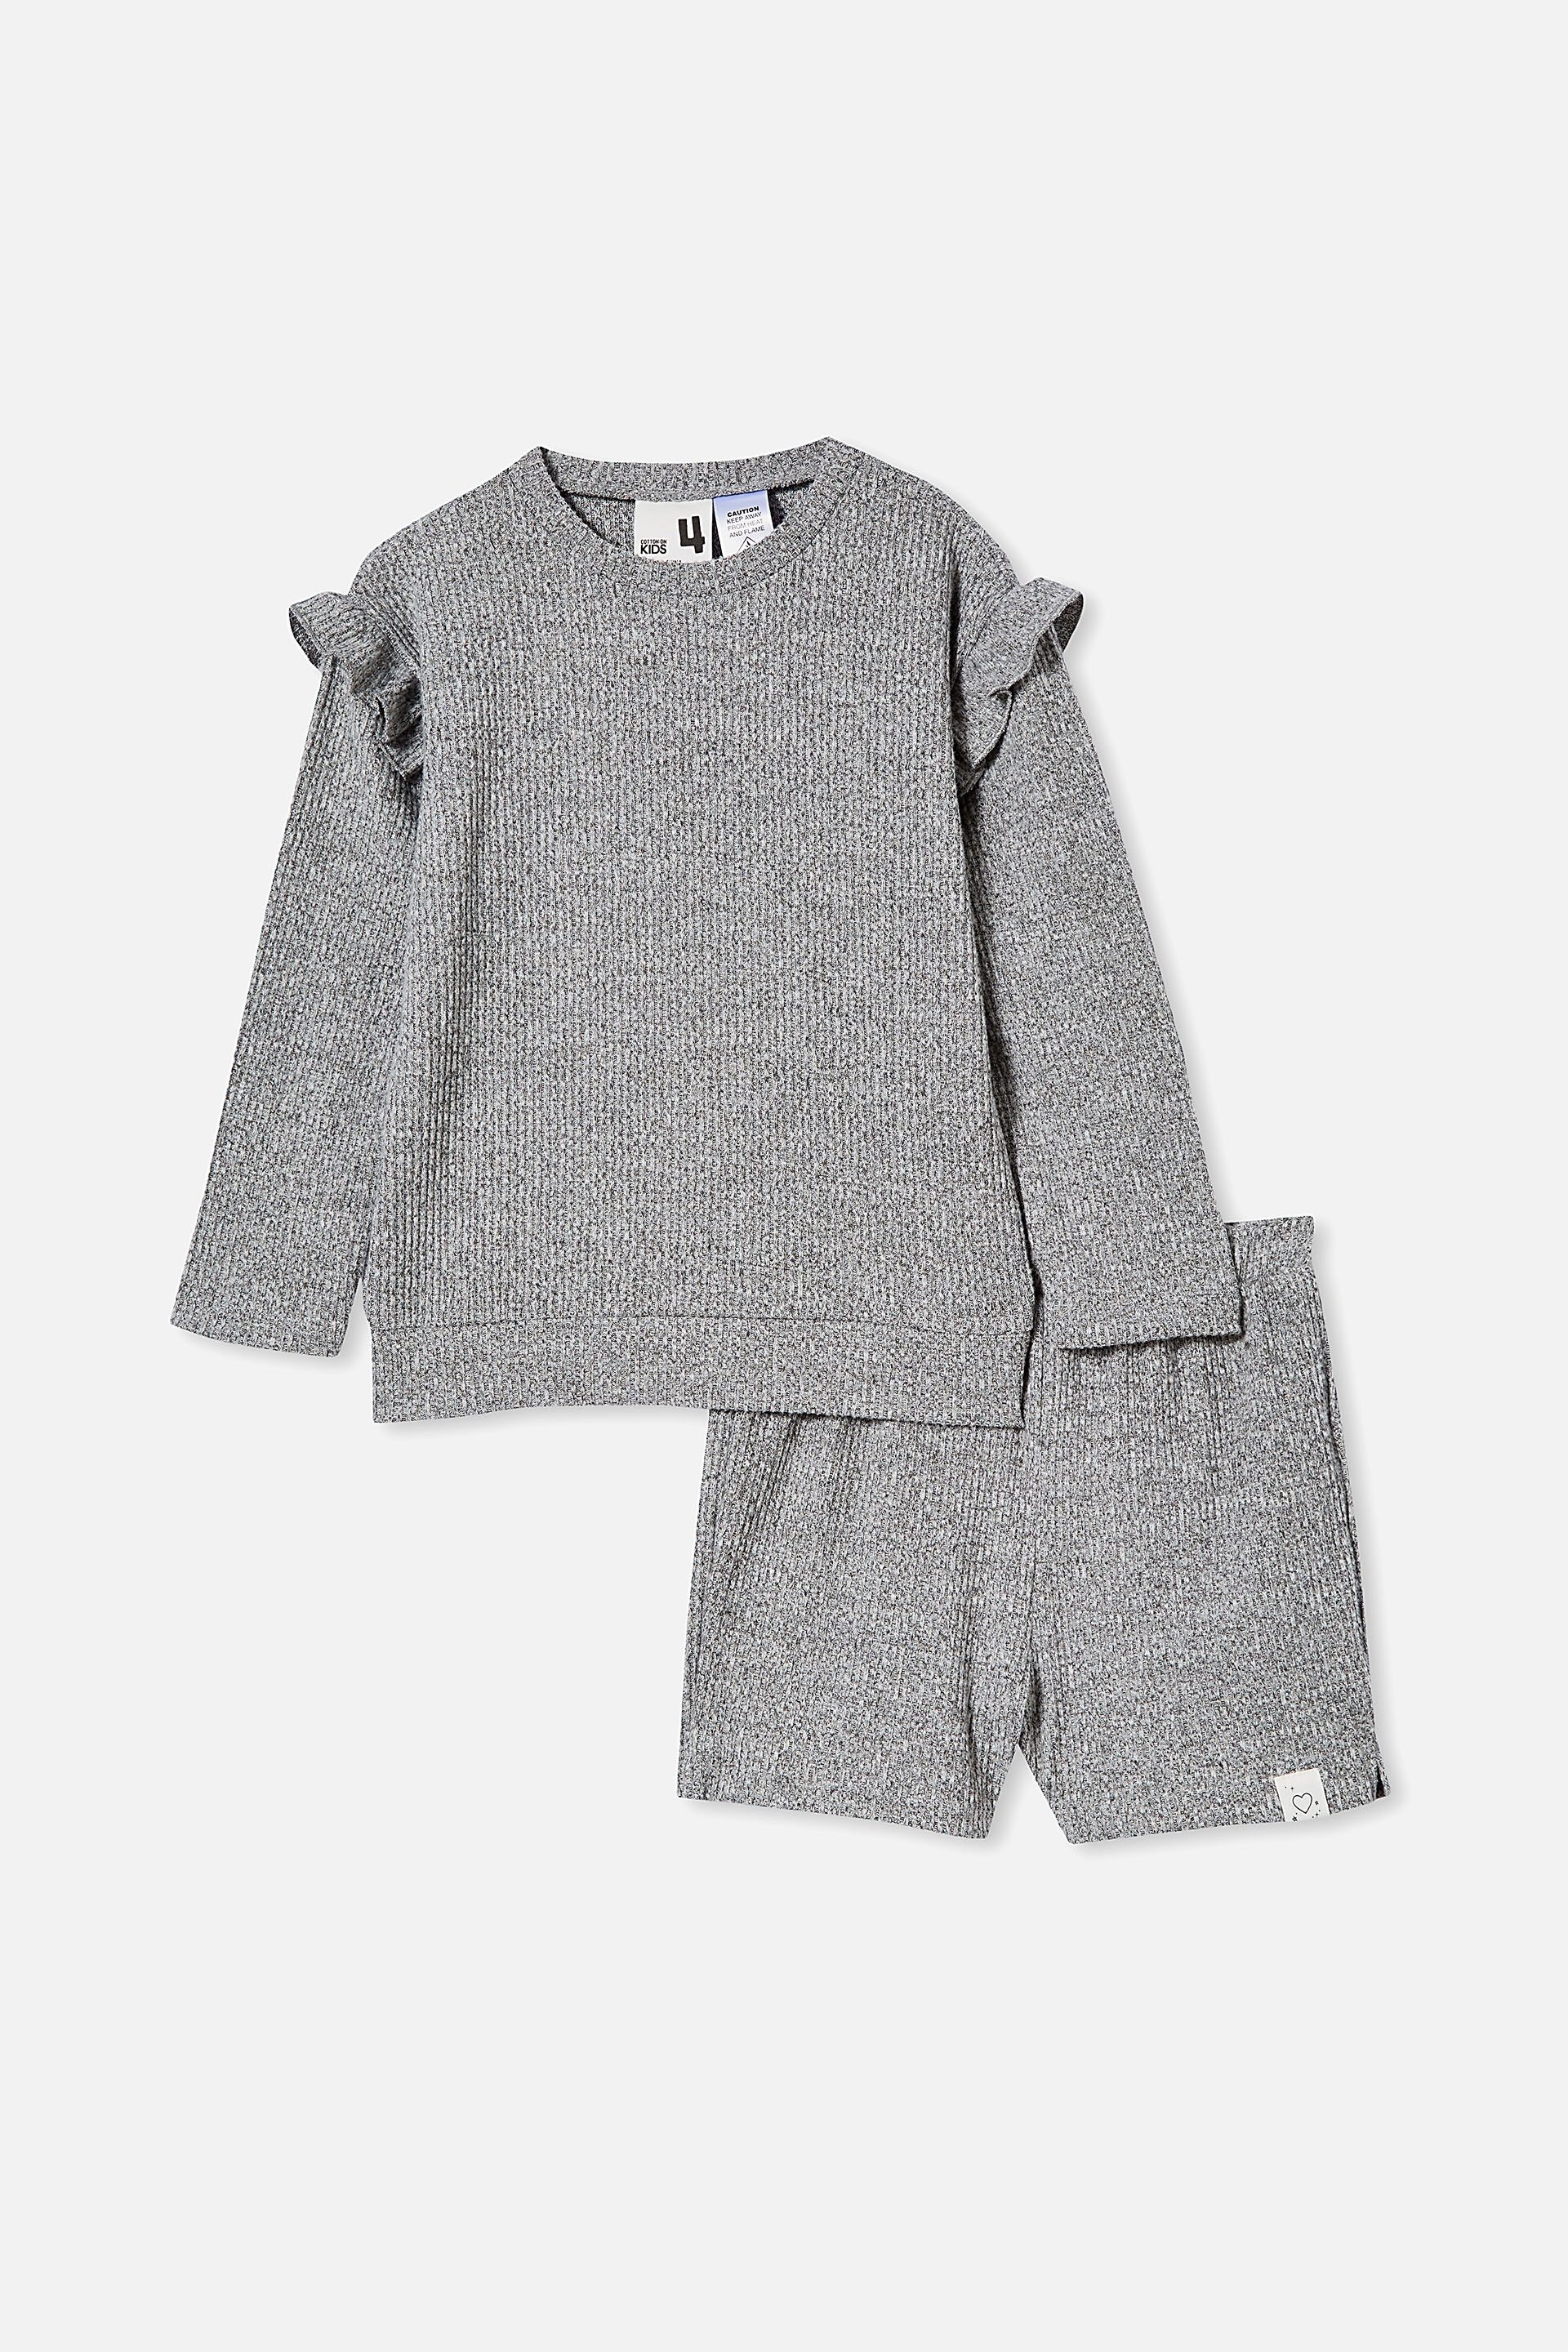 Cotton On Kids - Rosa Long Sleeve Pyjama Set - Light grey marle